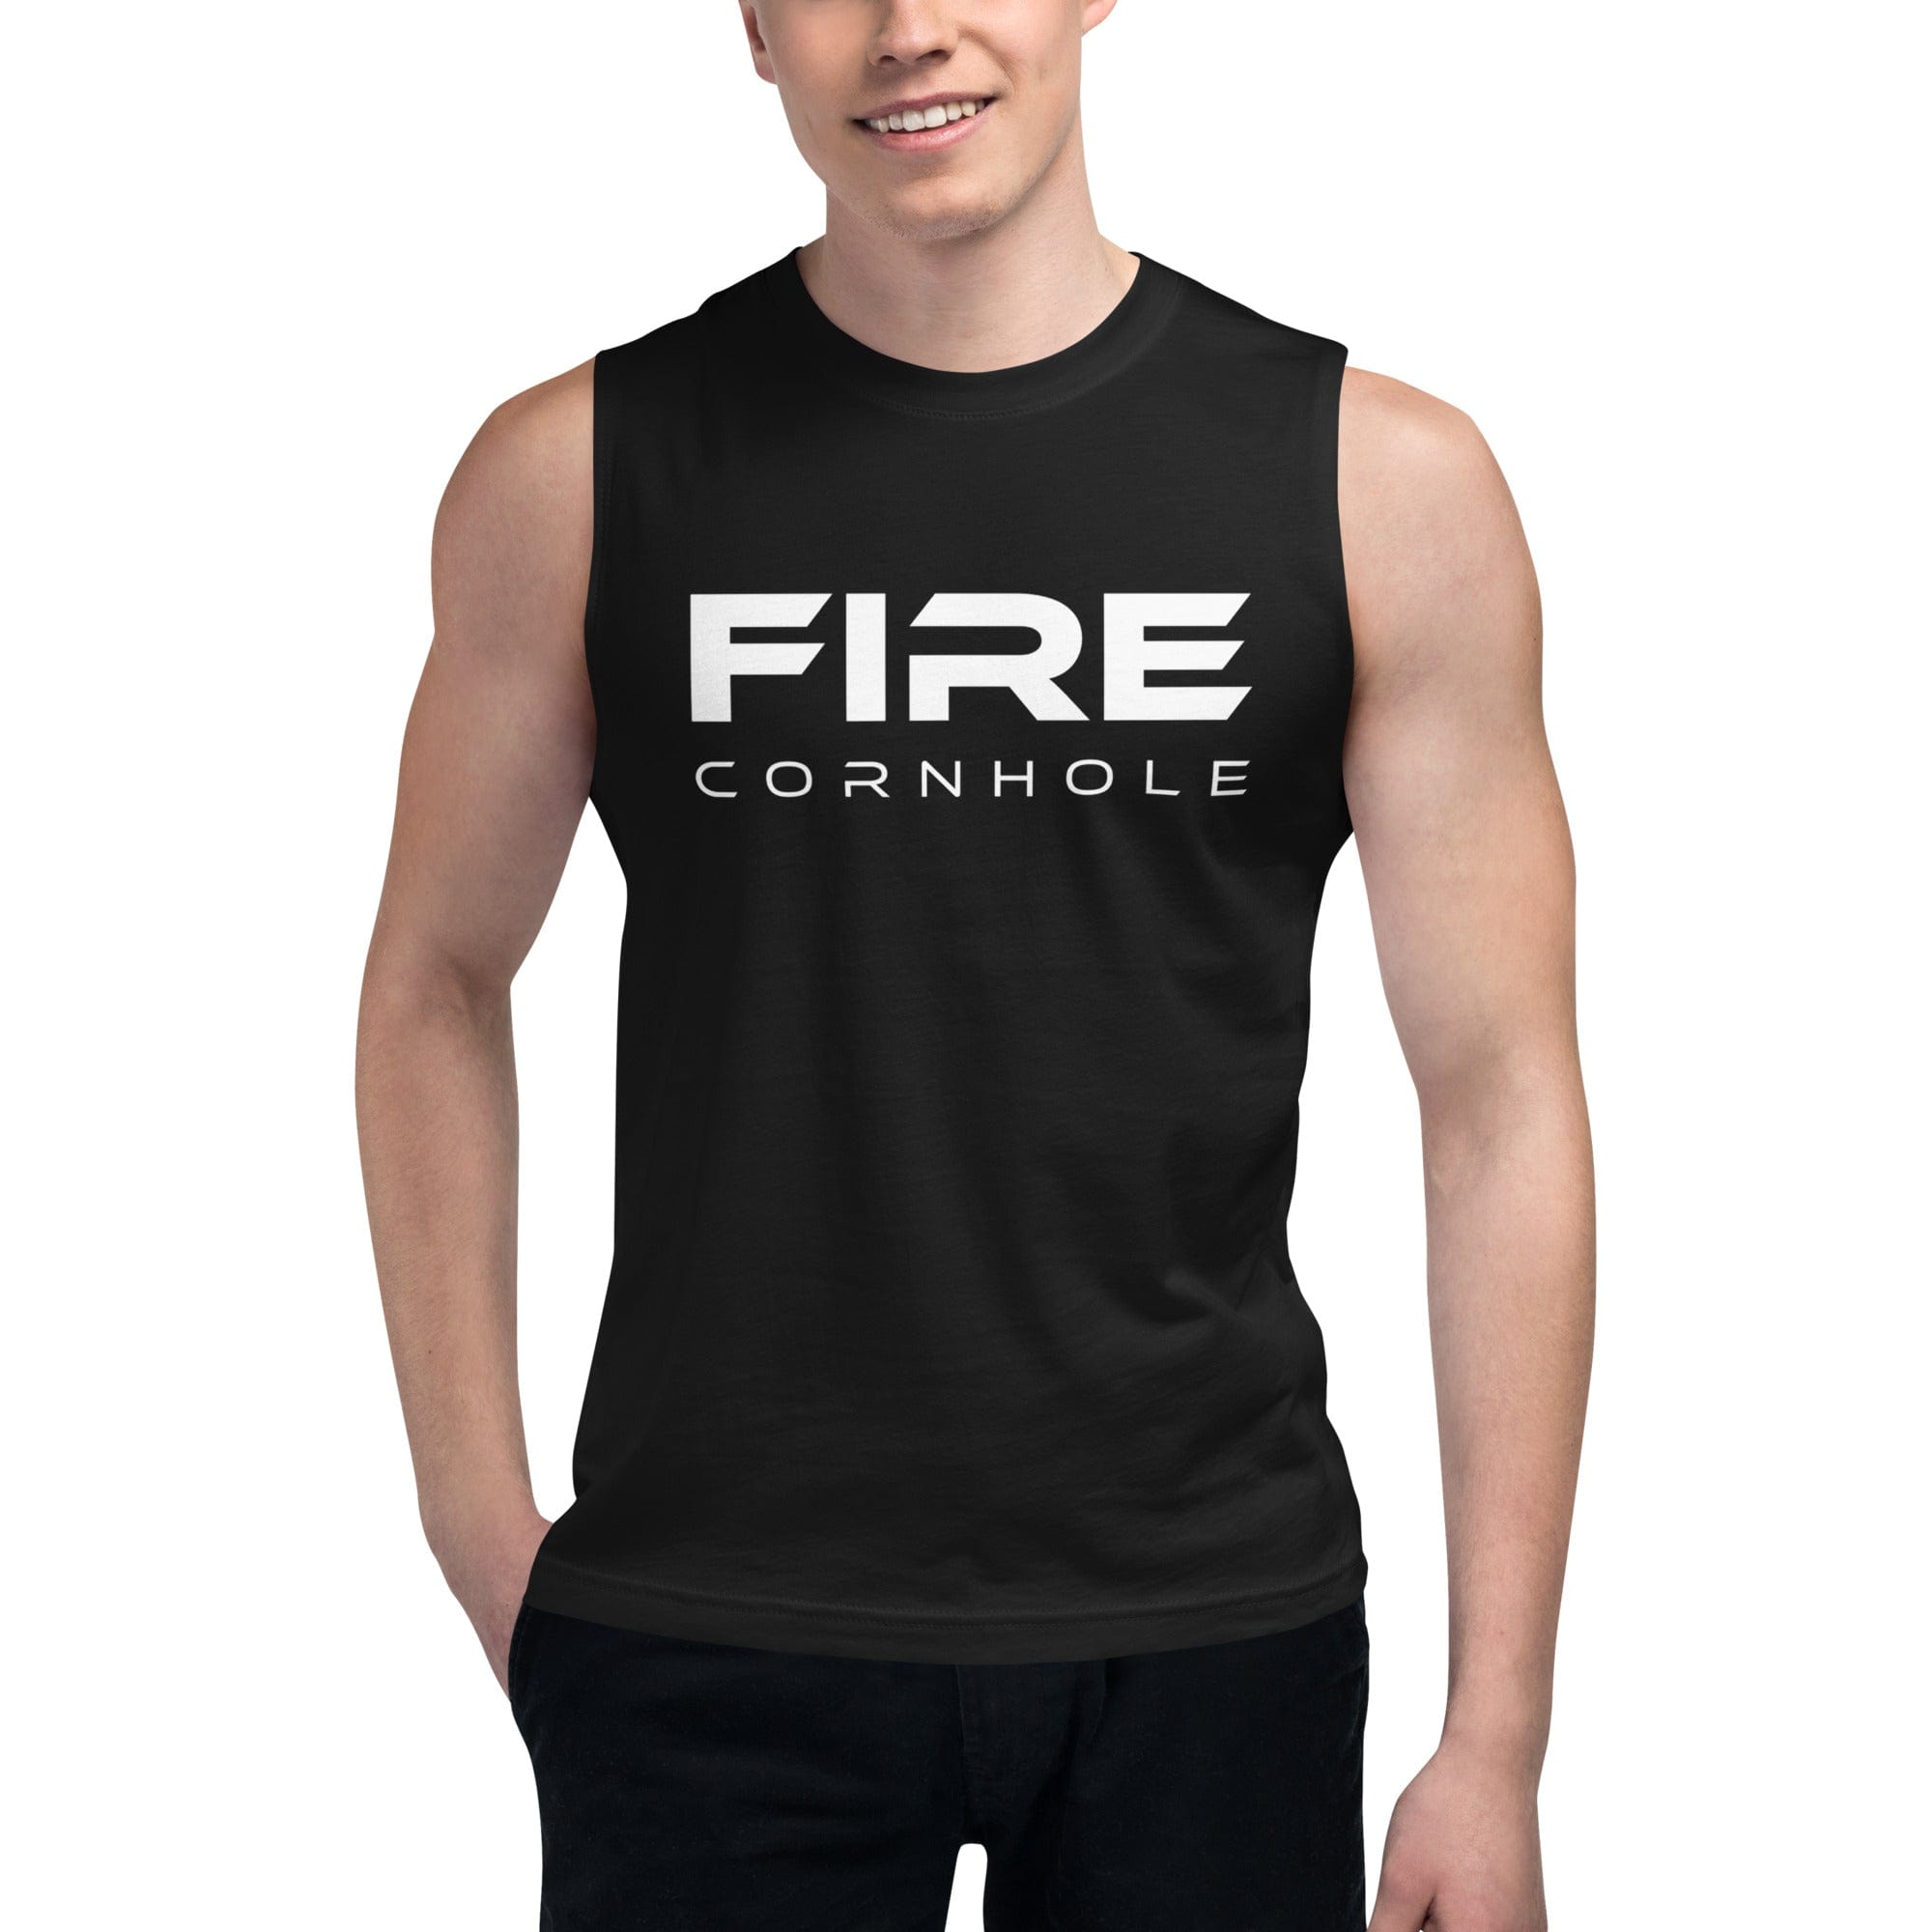 Men's black muscle shirt with Fire Cornhole logo in white